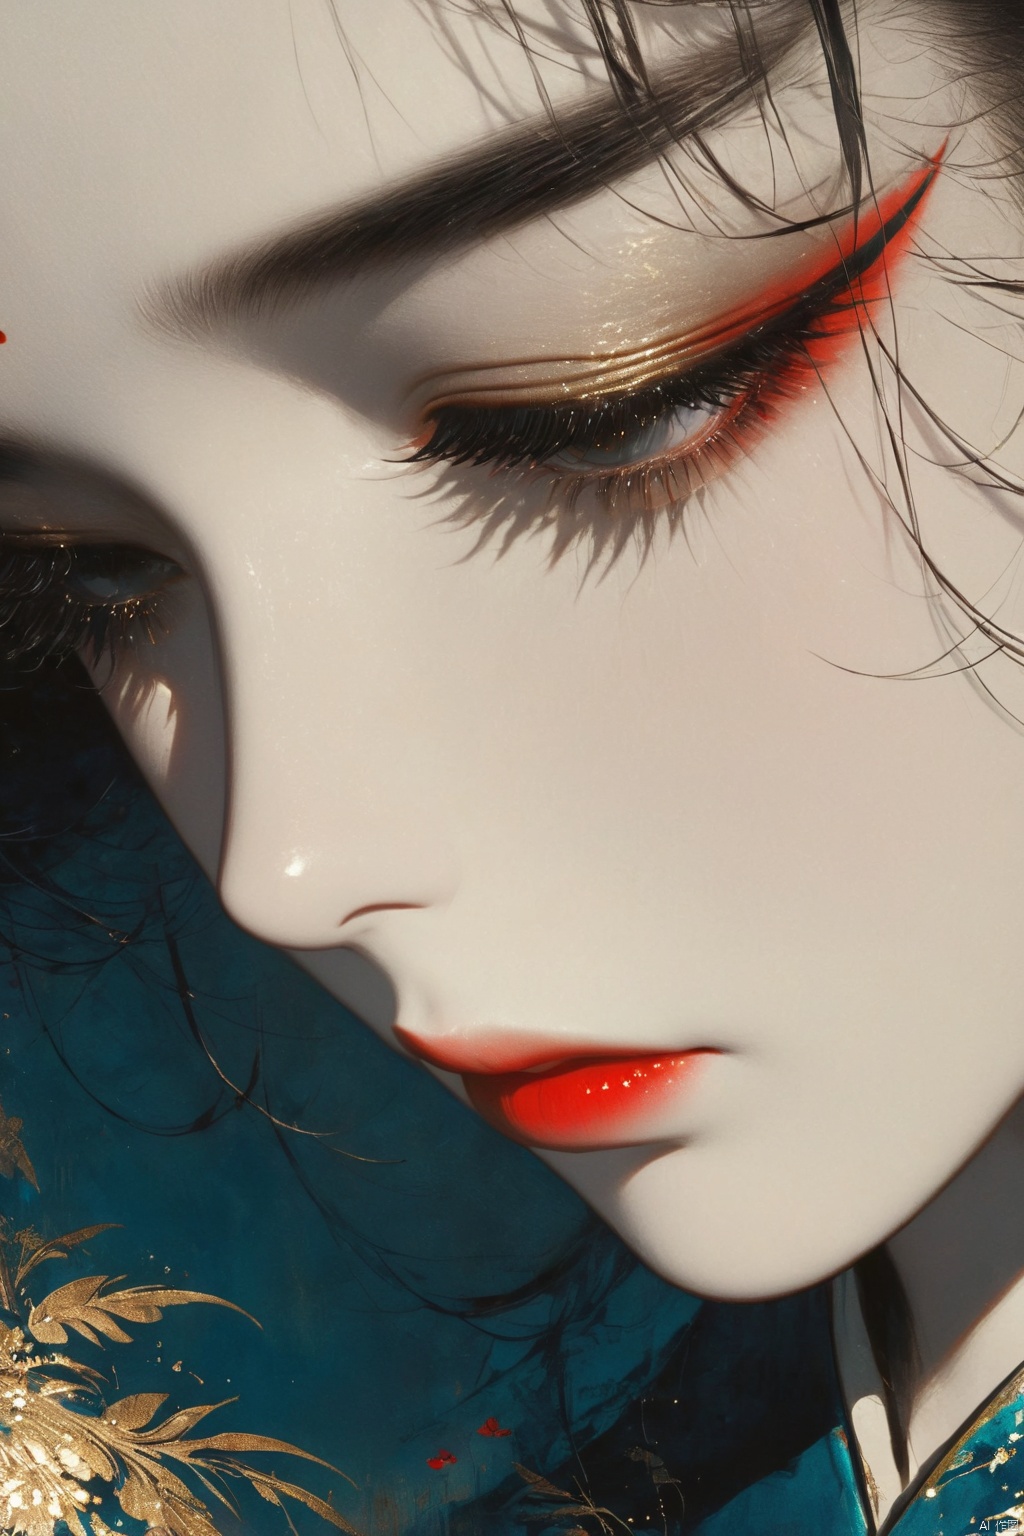 1 Girl, close-up, red lips, long eyelashes, beautiful sad wallpaper style
